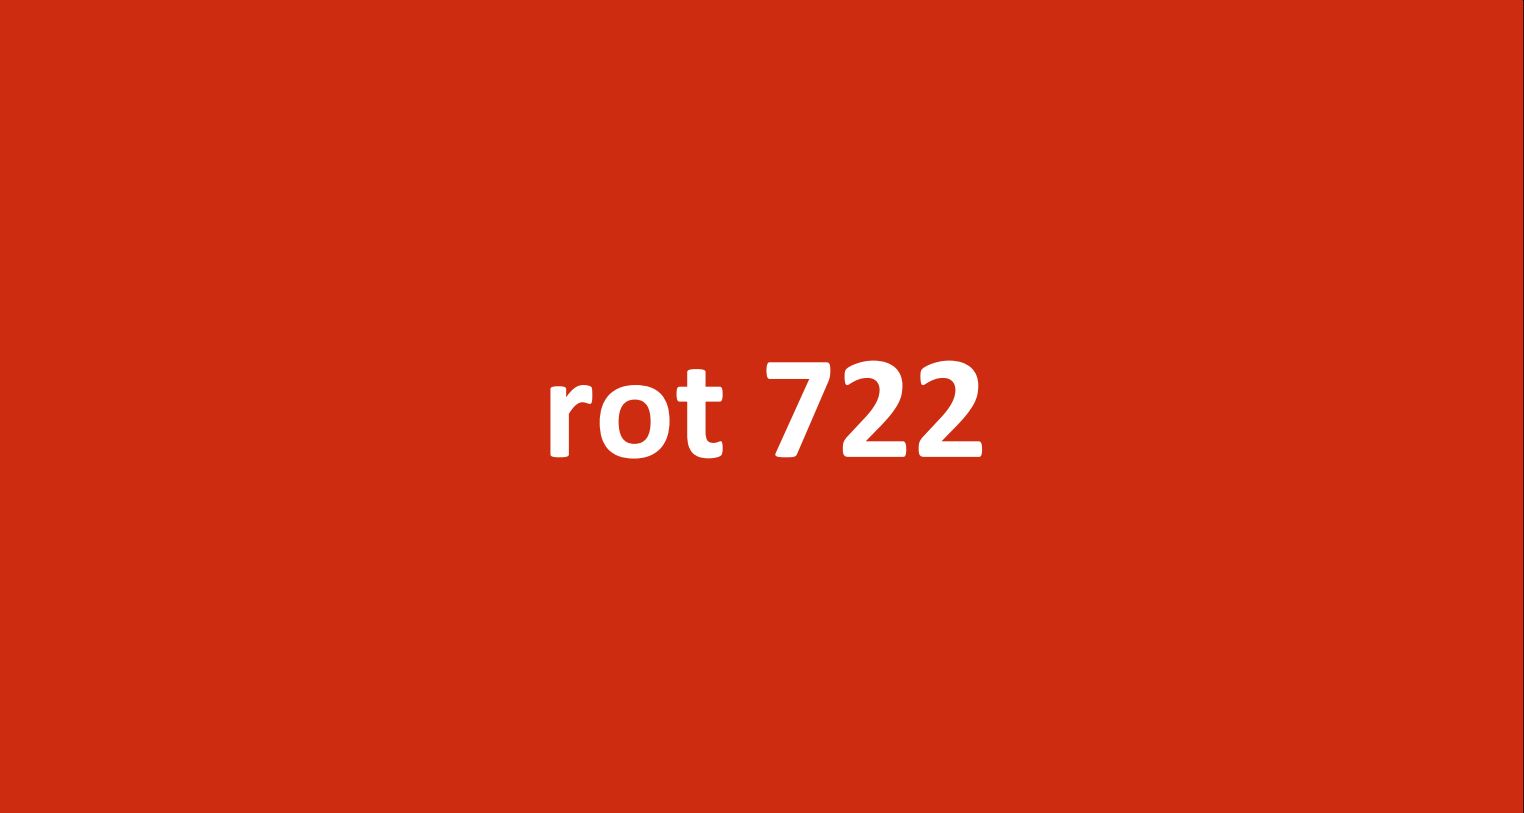 rot 722